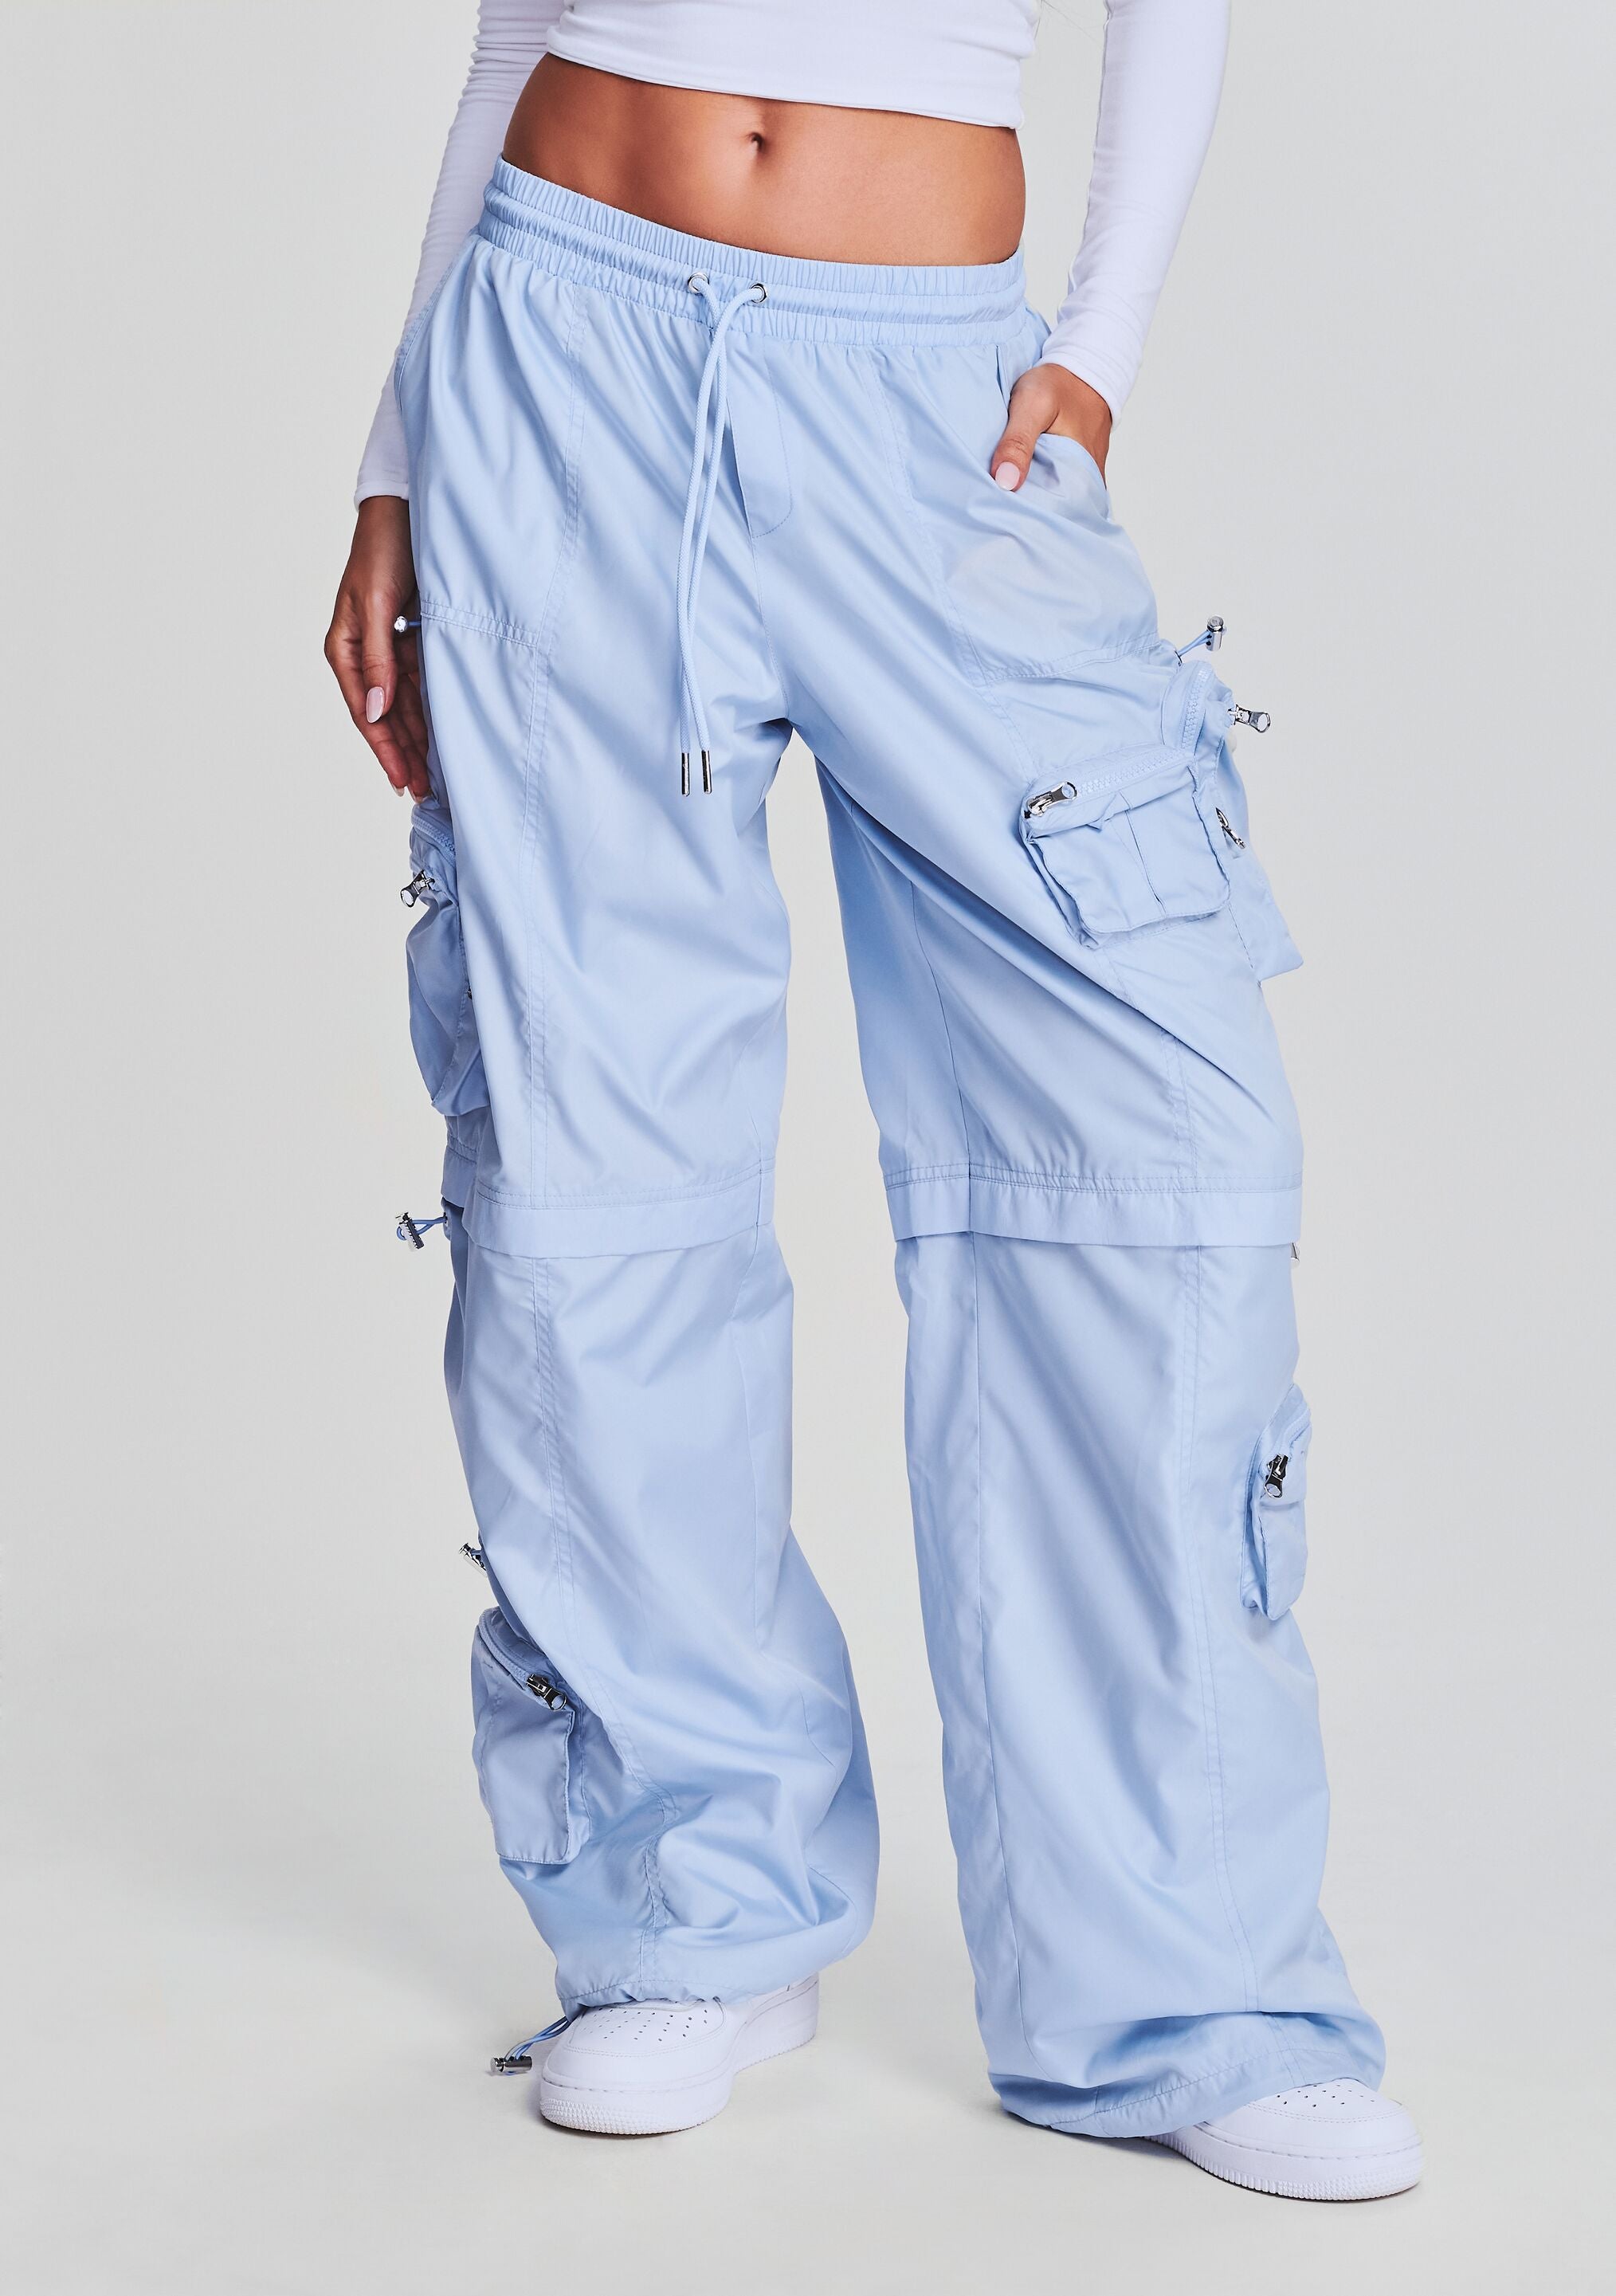 Women's Cargo & Parachute Pants | Cotton On South Africa